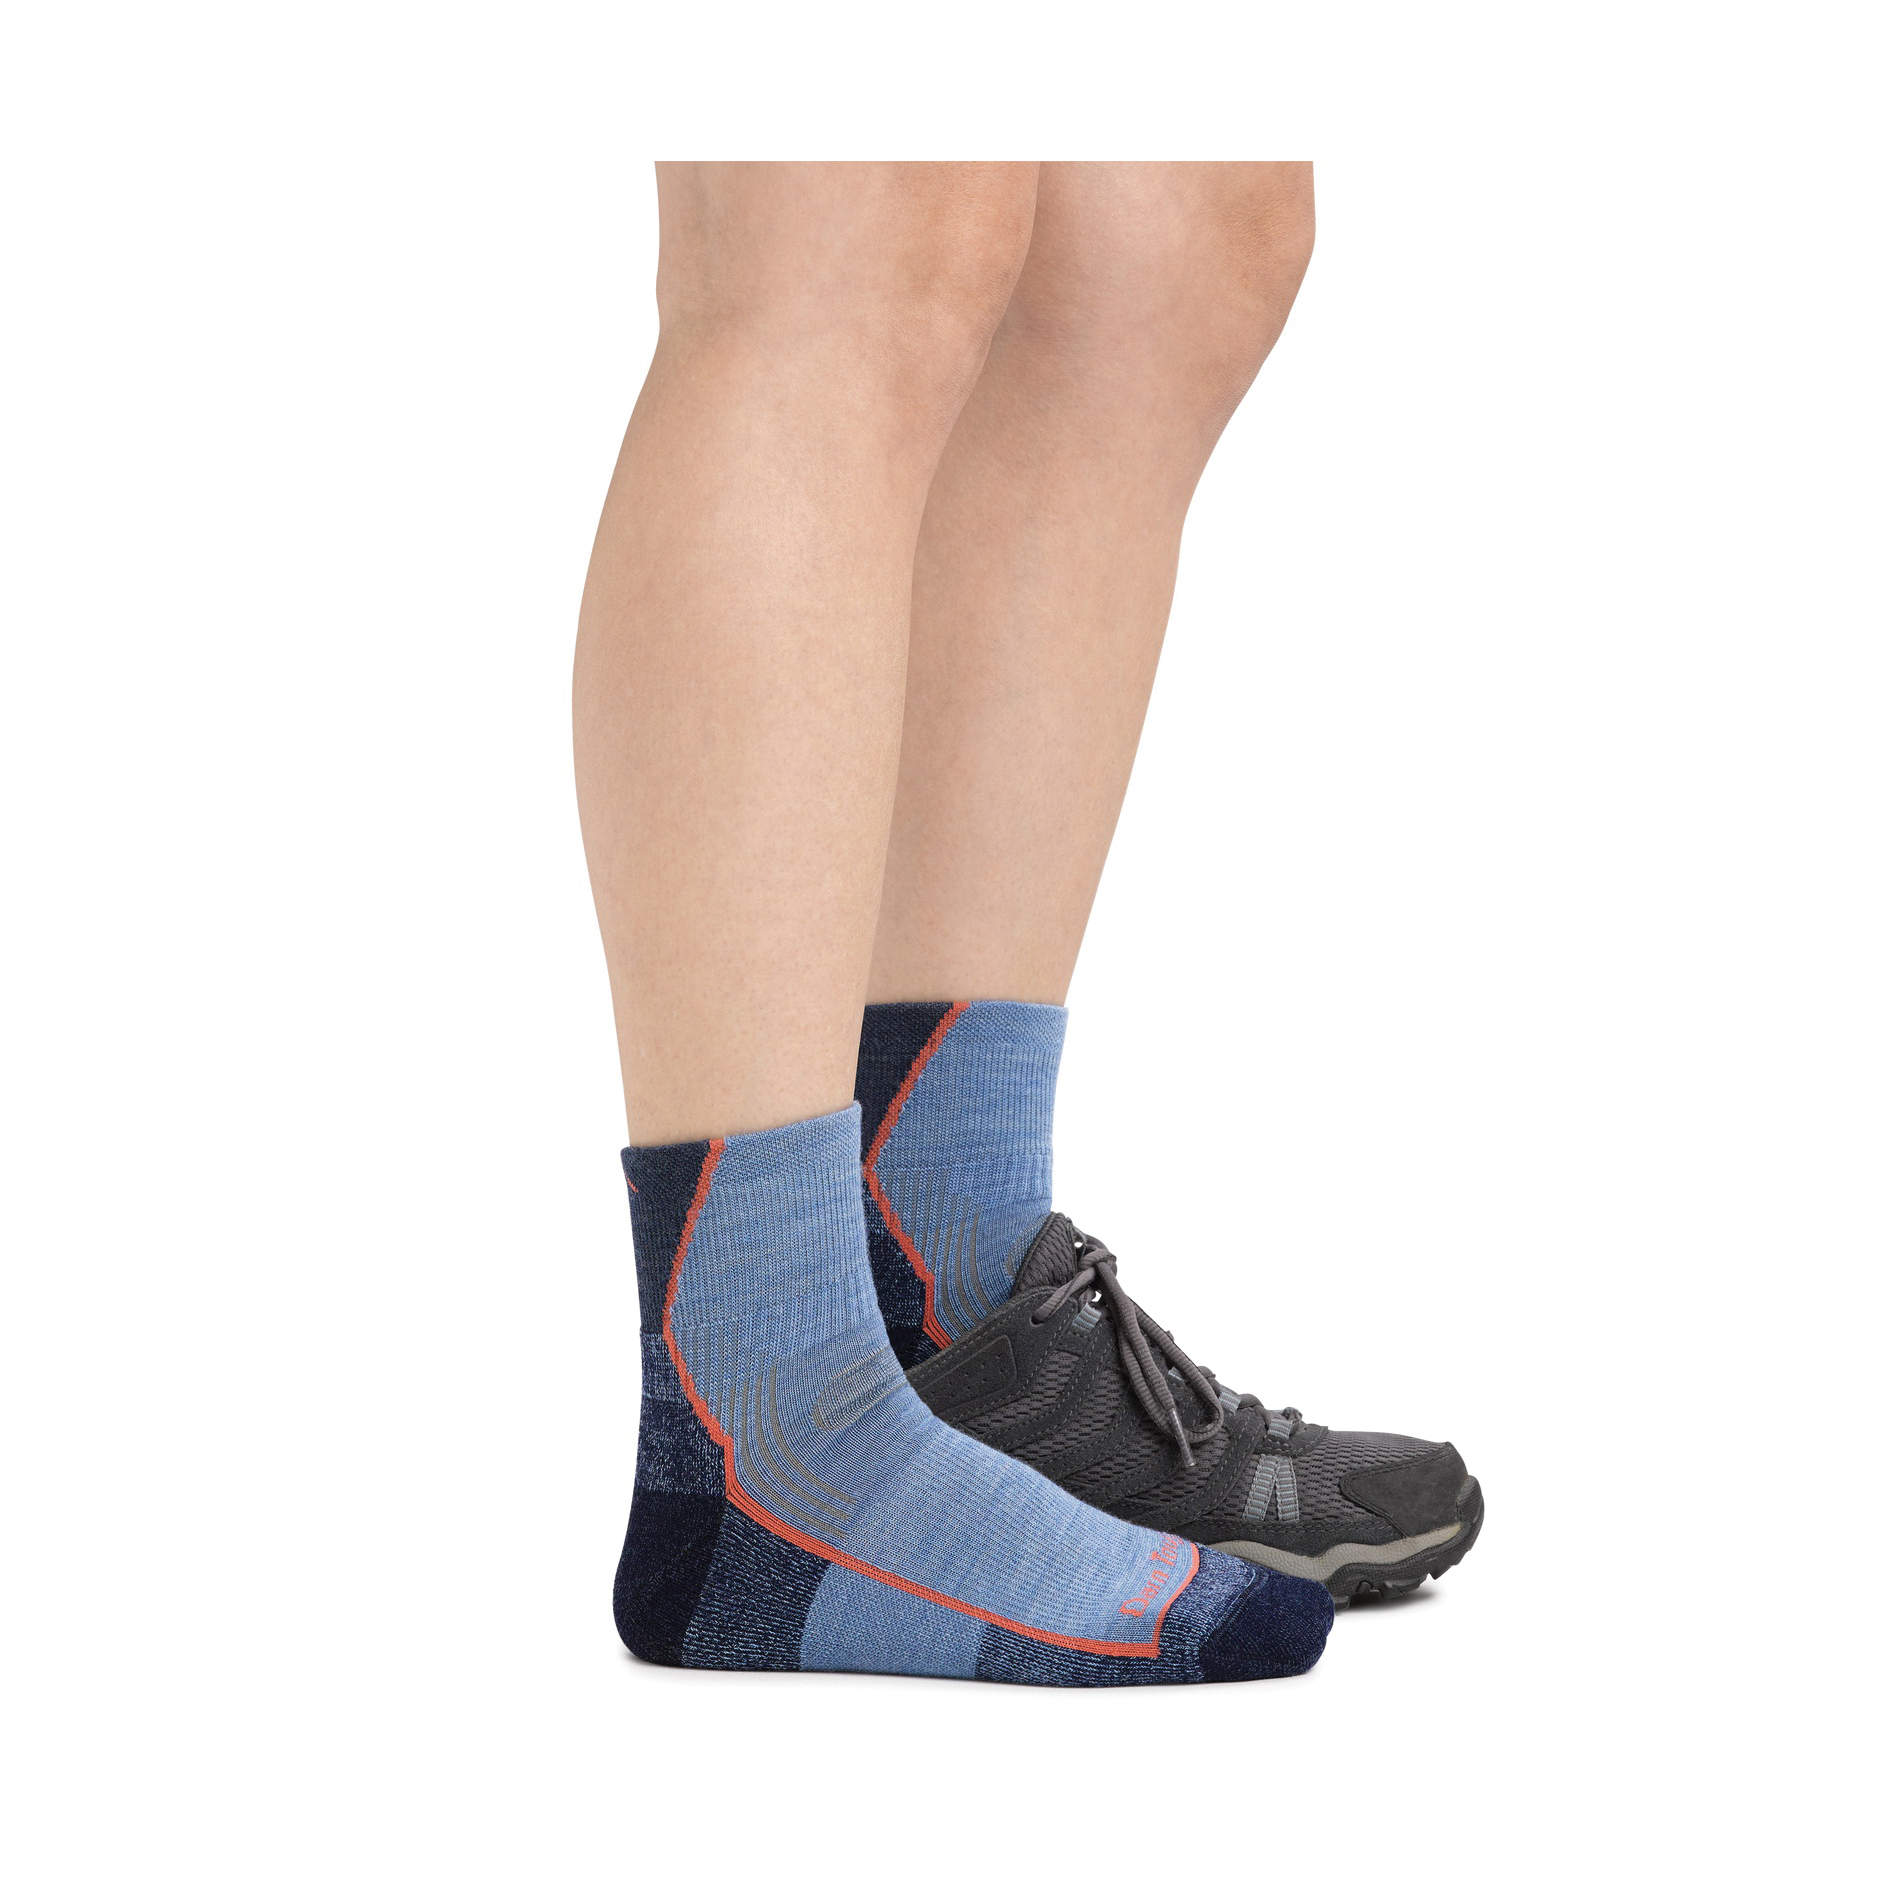 Darn Tough Hiker Series 1958-TAUPE-M Quarter Hiking Socks, Women's, M, Lycra Spandex/Merino Wool/Nylon, Taupe - 3